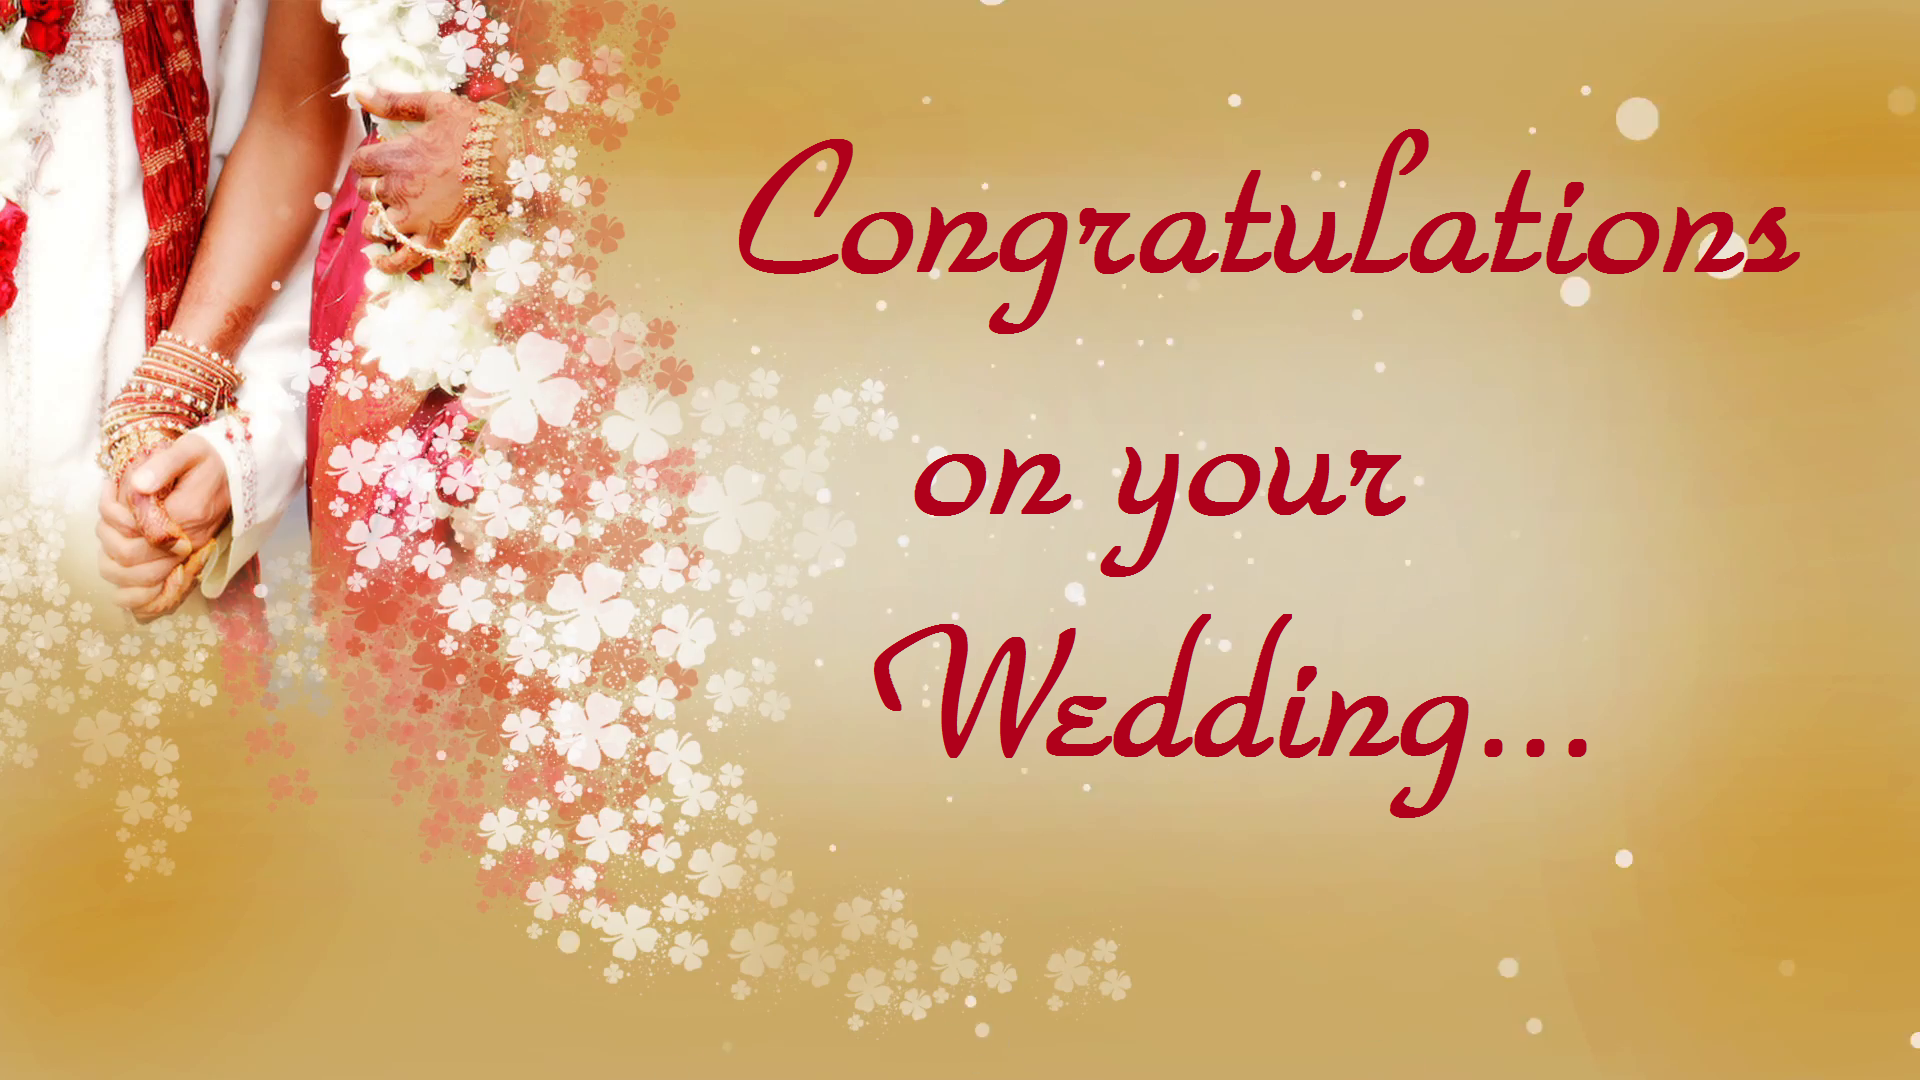 wedding congratulations image hd